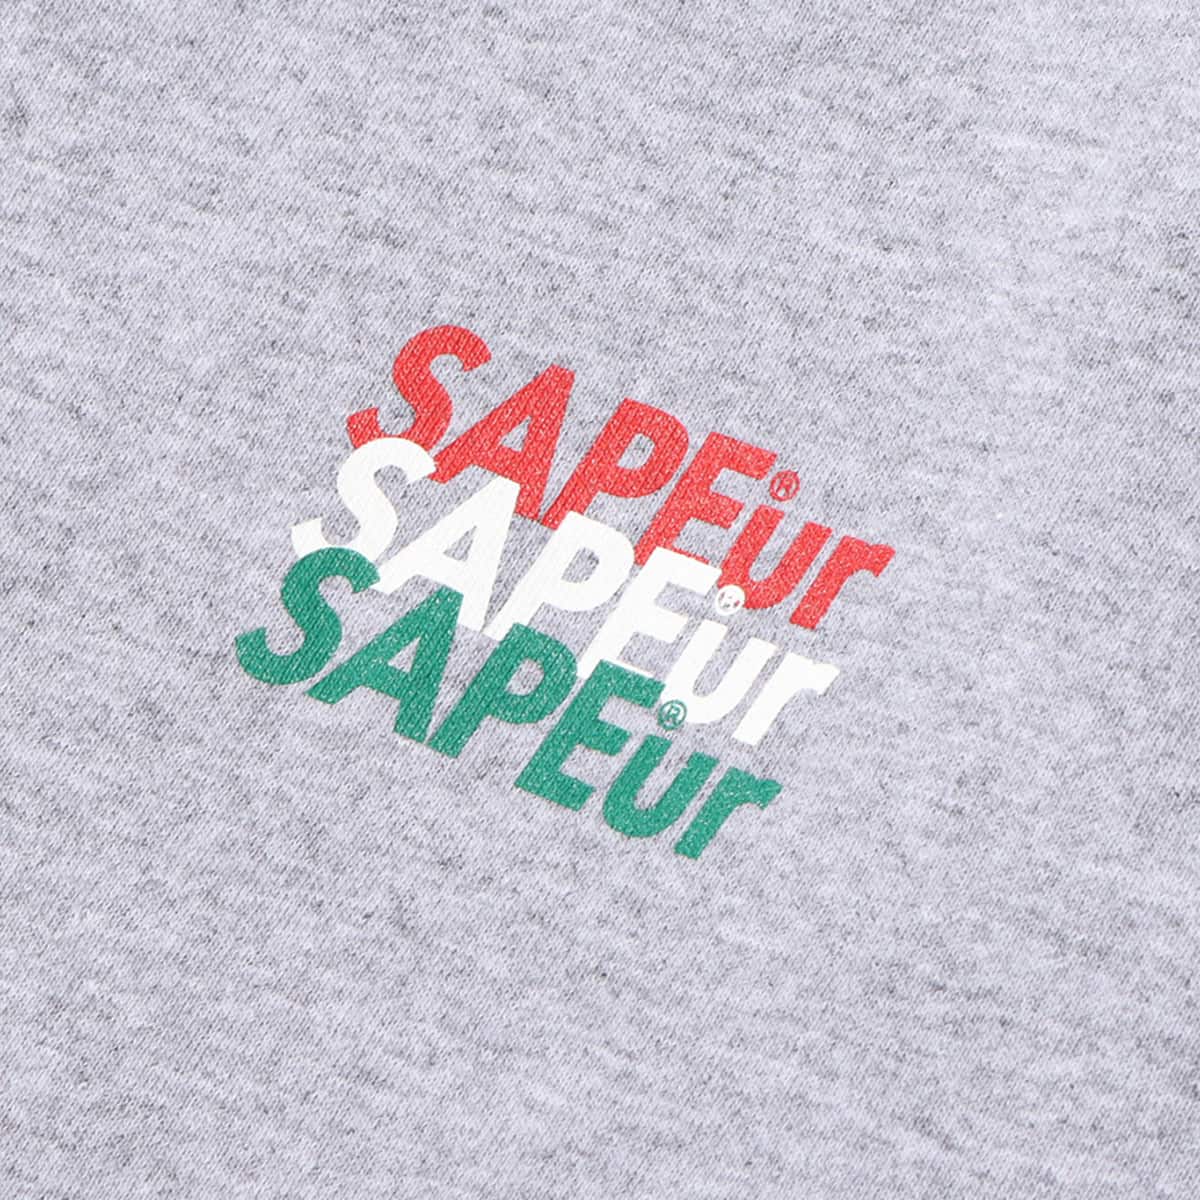 【XL】SAPEur サプール NightSafari  Tシャツ